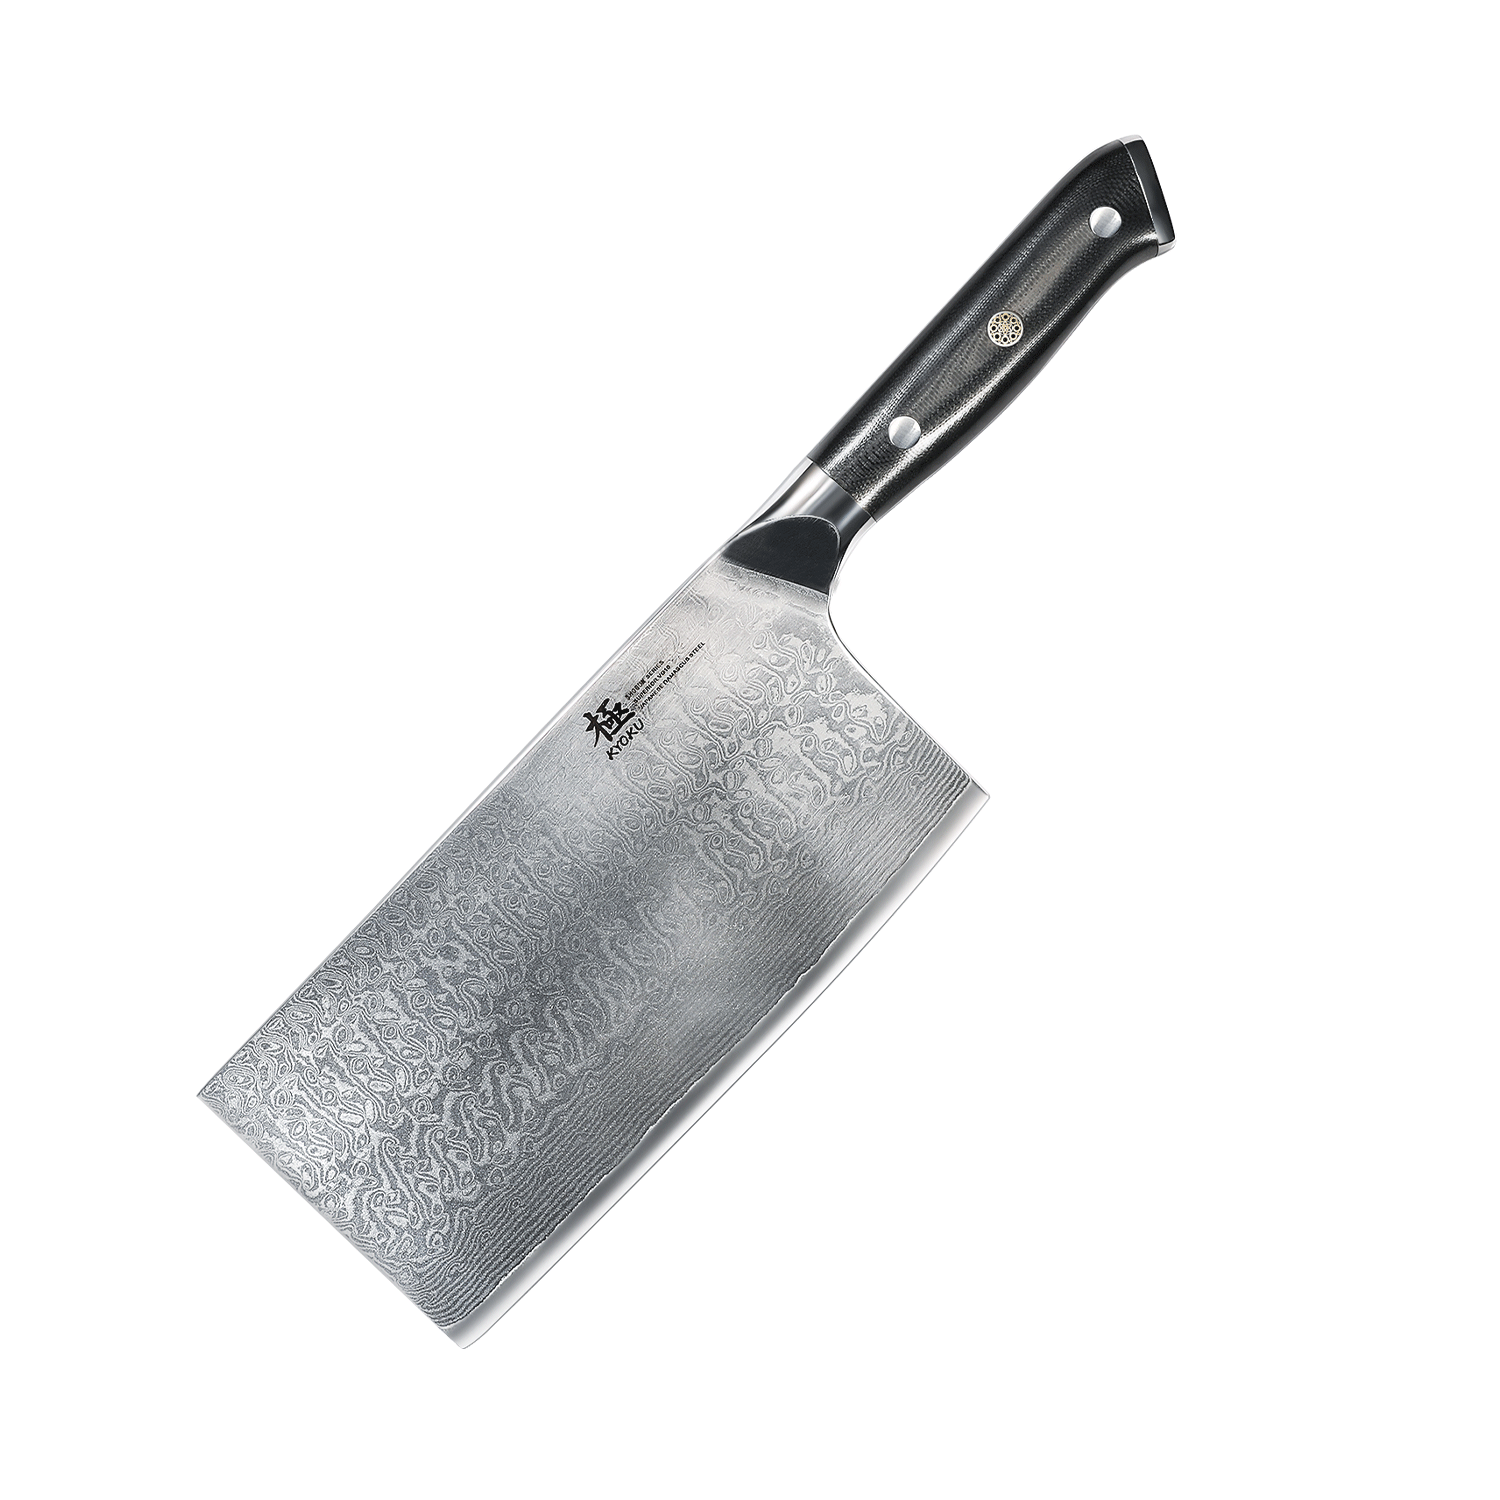 Shop Kyoku Japanese Cleaver Knives | Cutting Like a Chef